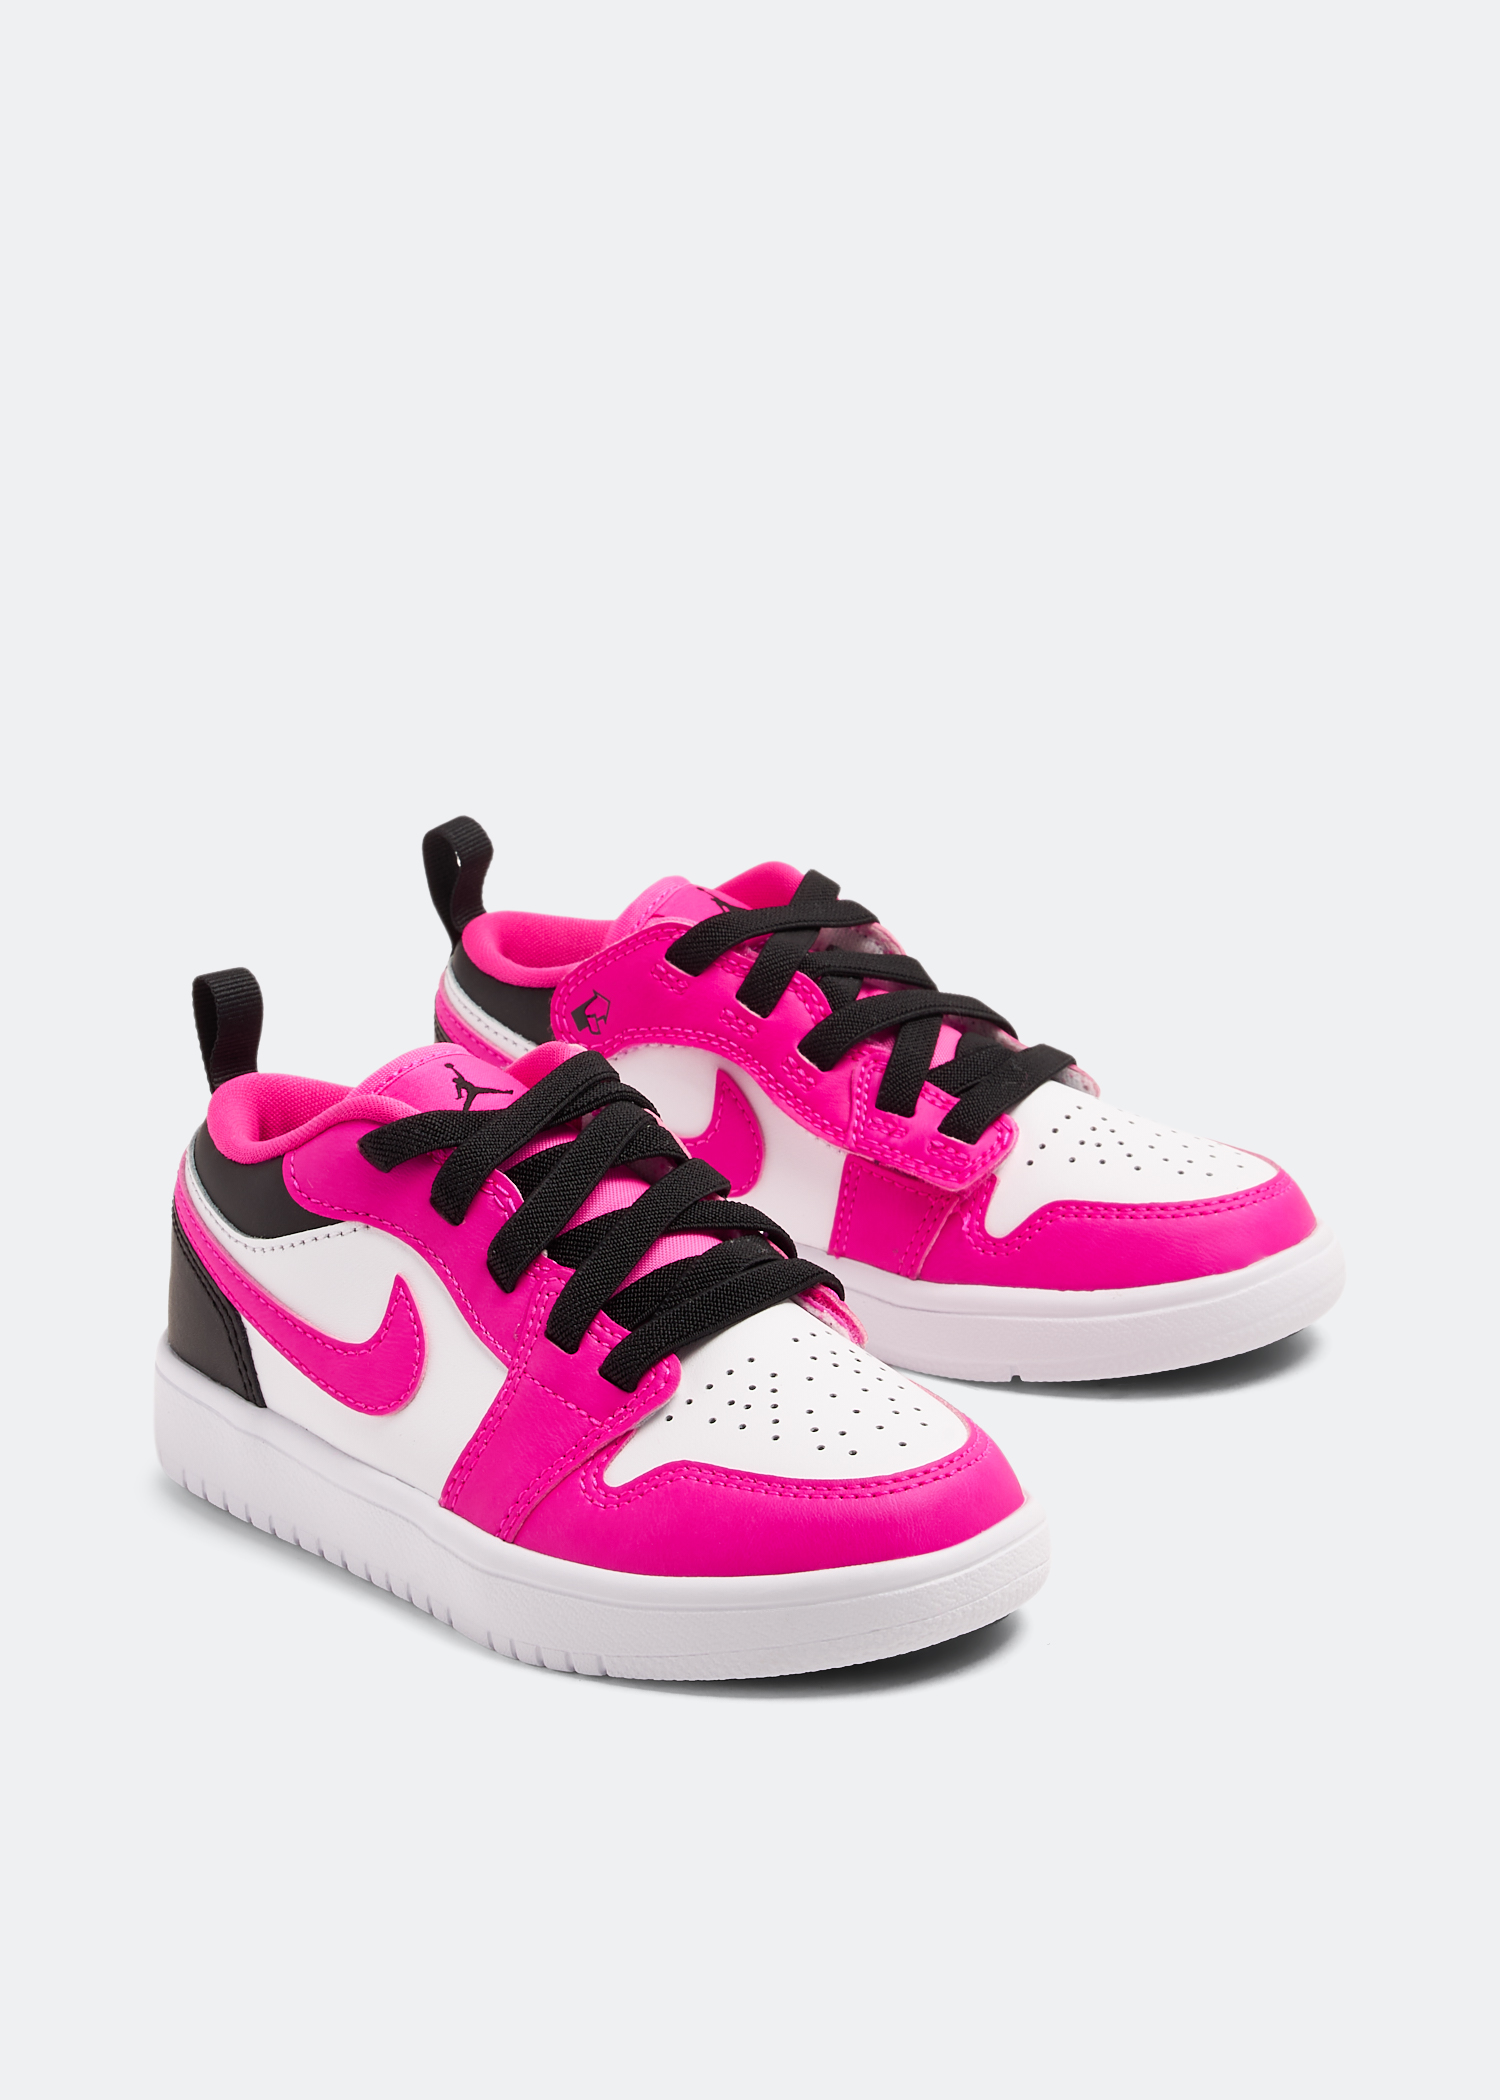 Nike Jordan 1 Low Alt 'Fierce Pink' sneakers for Girl - Pink in 